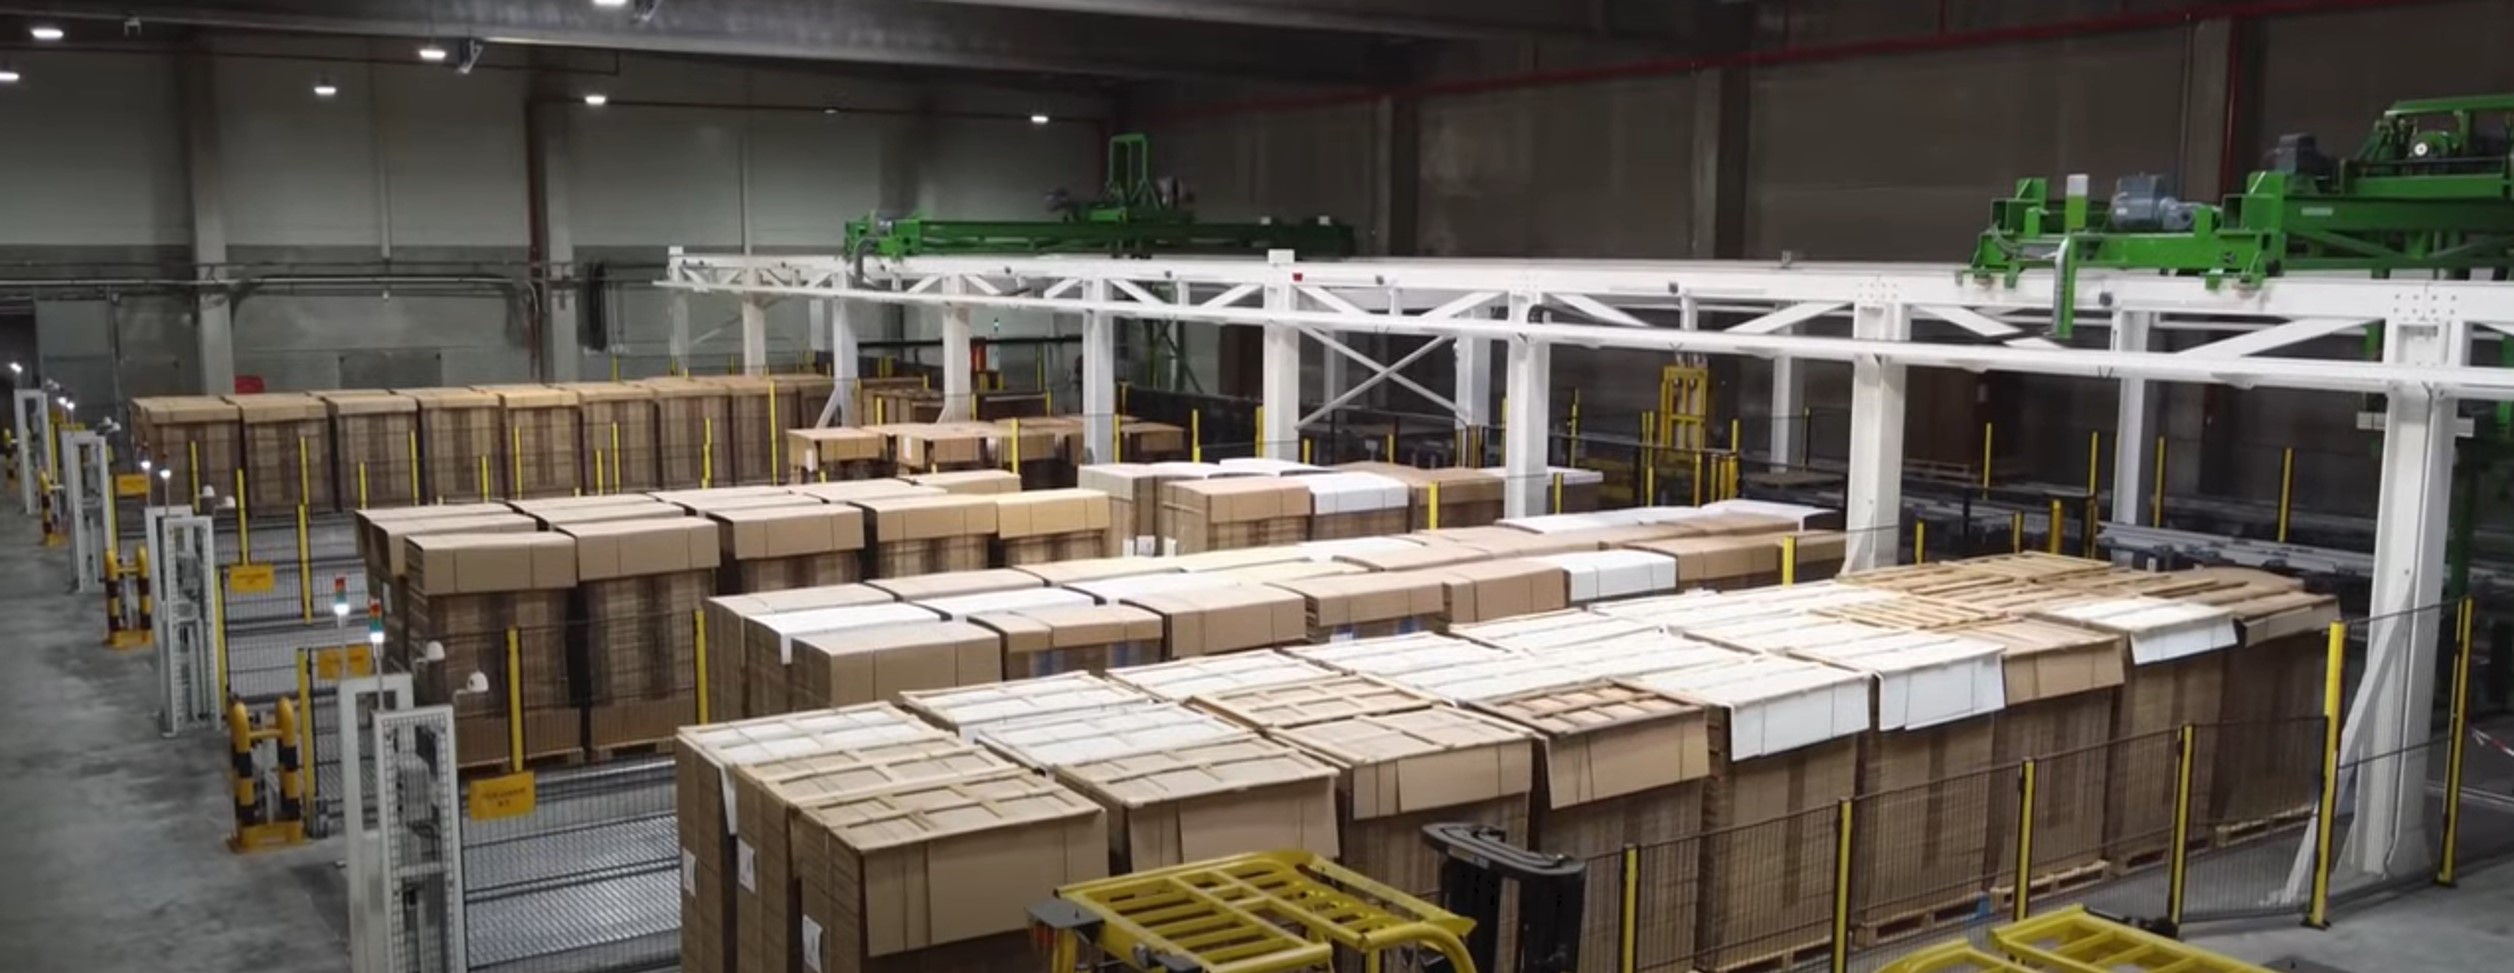 Système de stockage automatisé de carton ondulé